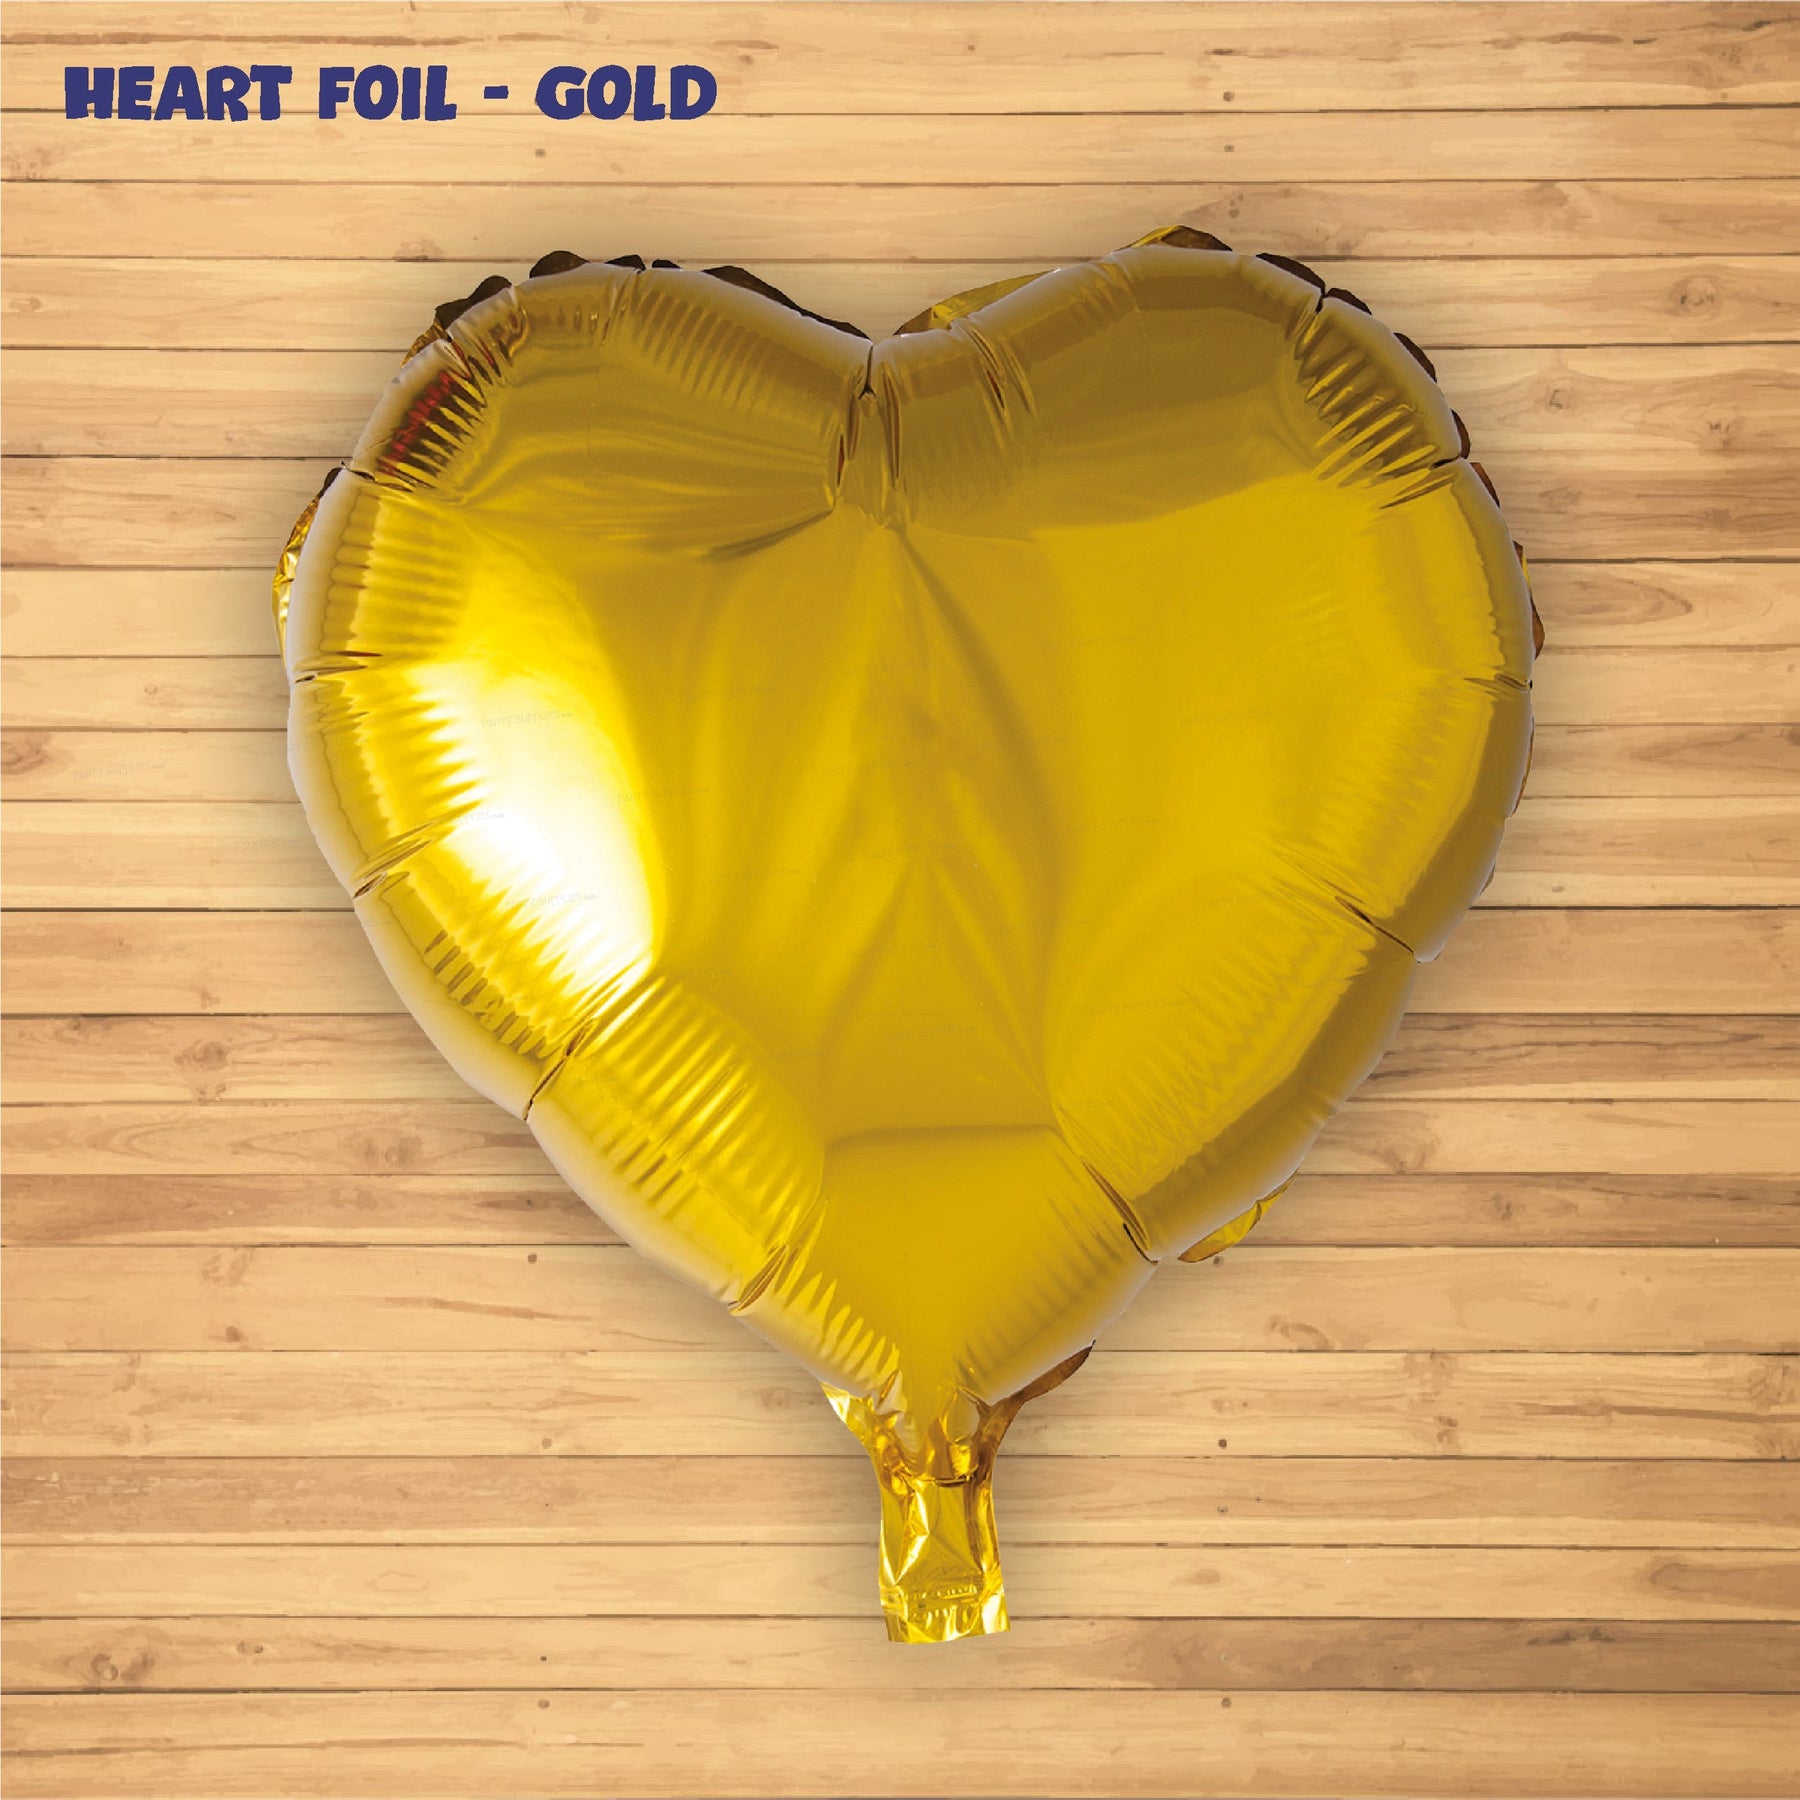 Heart Shape Premium Gold Foil Balloon